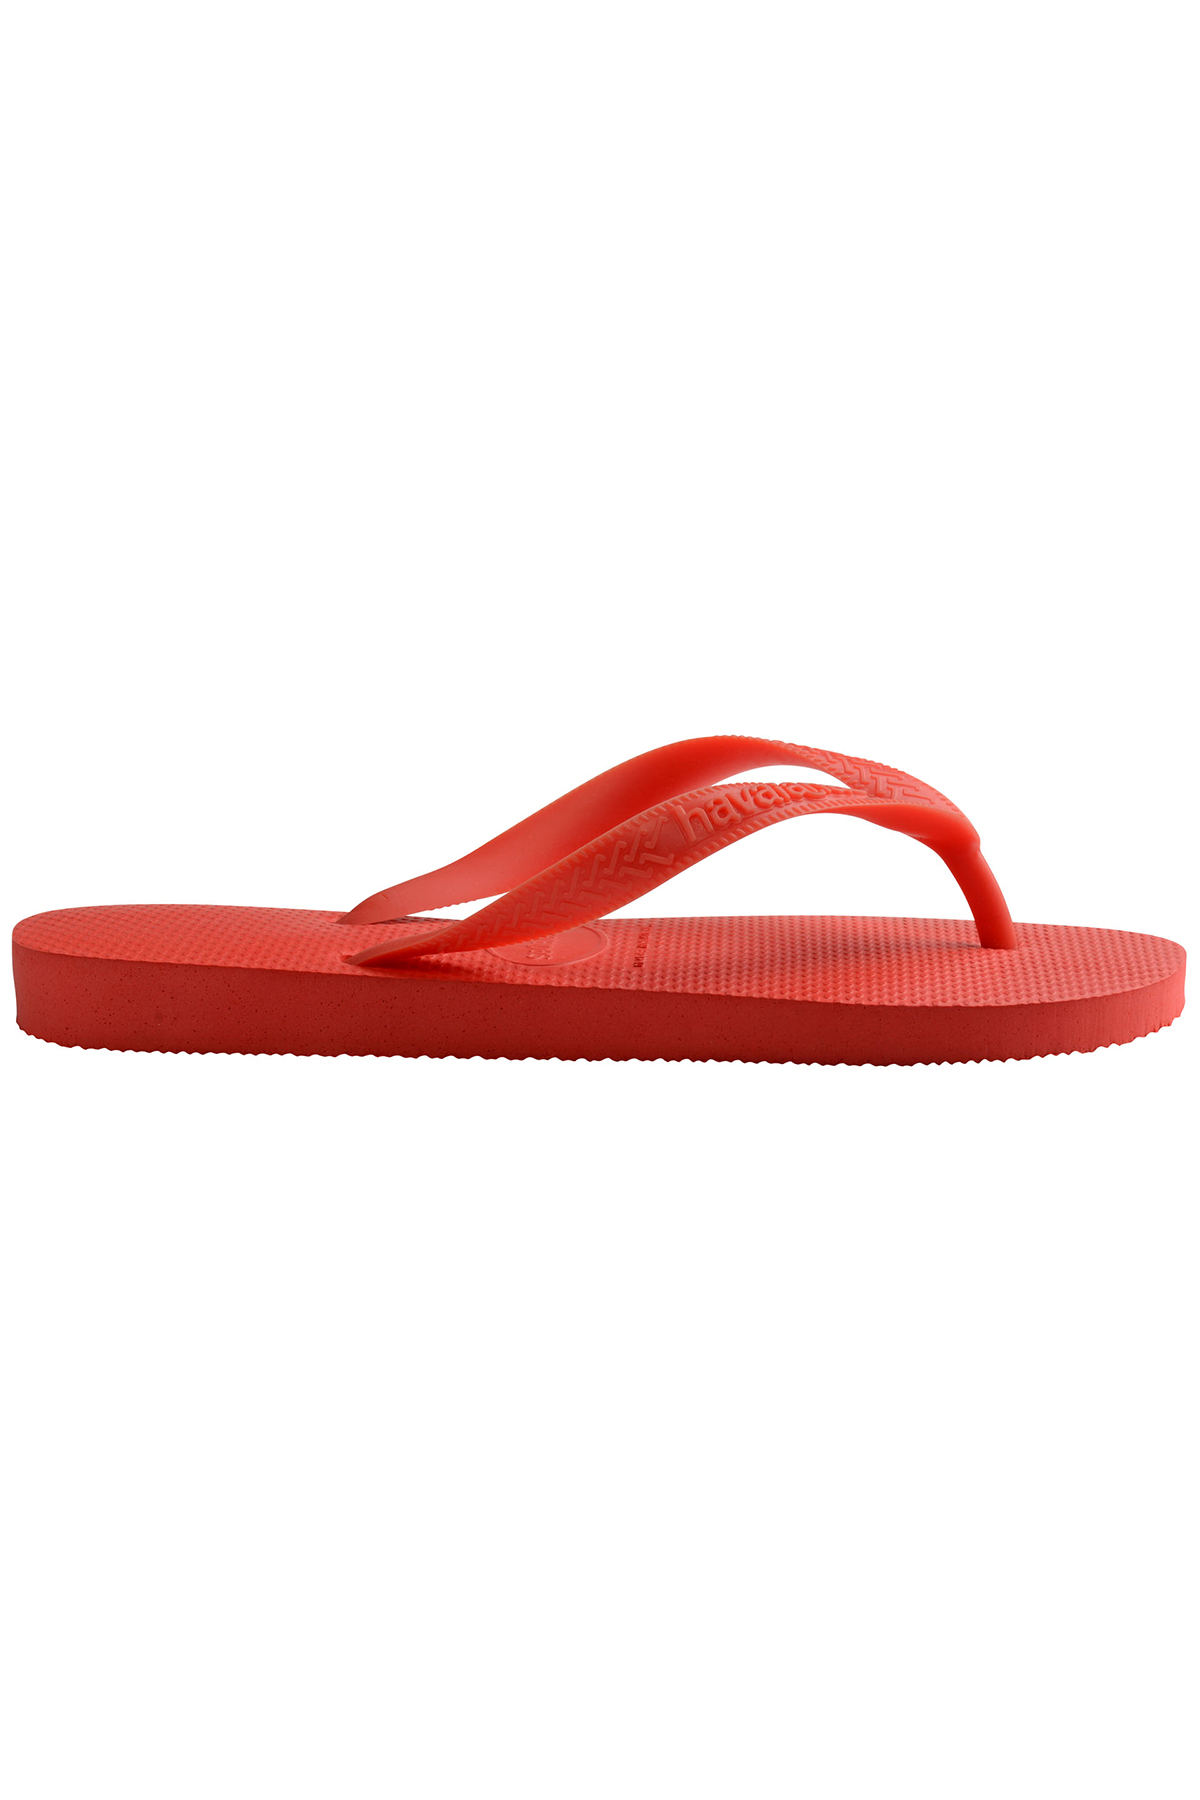 Havaianas Unisex Slippers - Red Crush